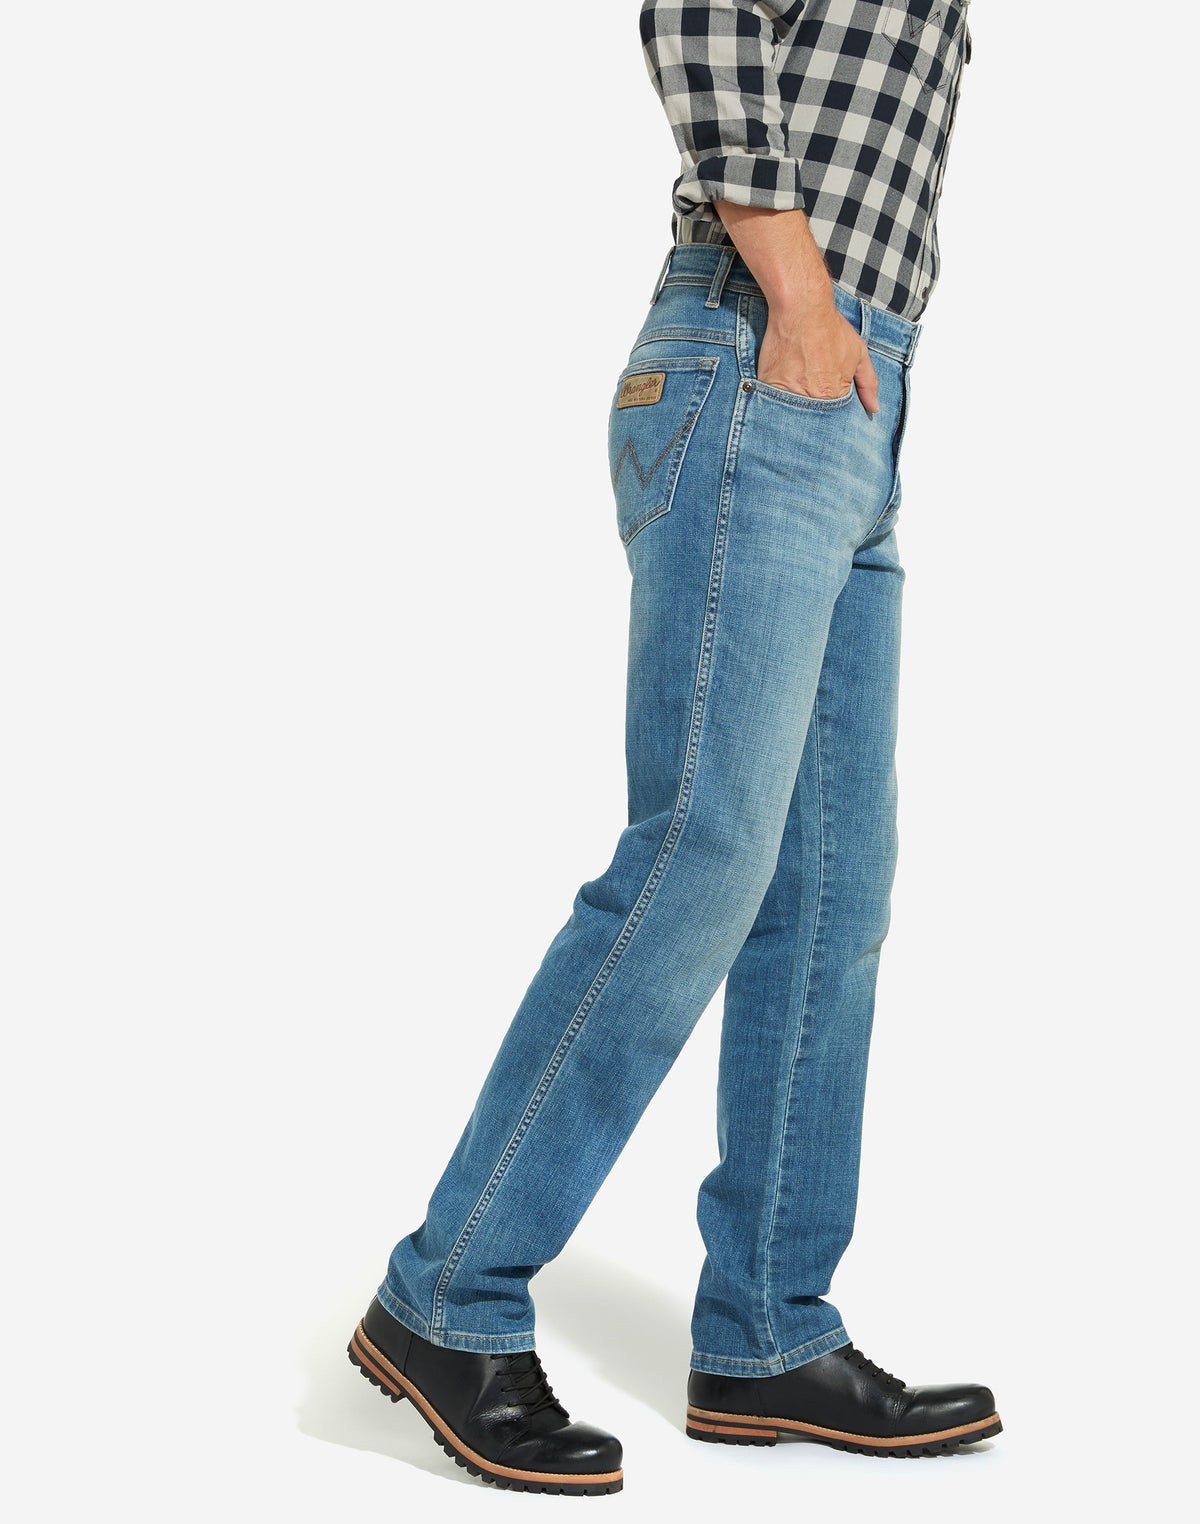 Mens Wrangler 'Texas' Jeans - Denim Stretch - Original Straight Fit, 02, W121-Core, Worn Broke